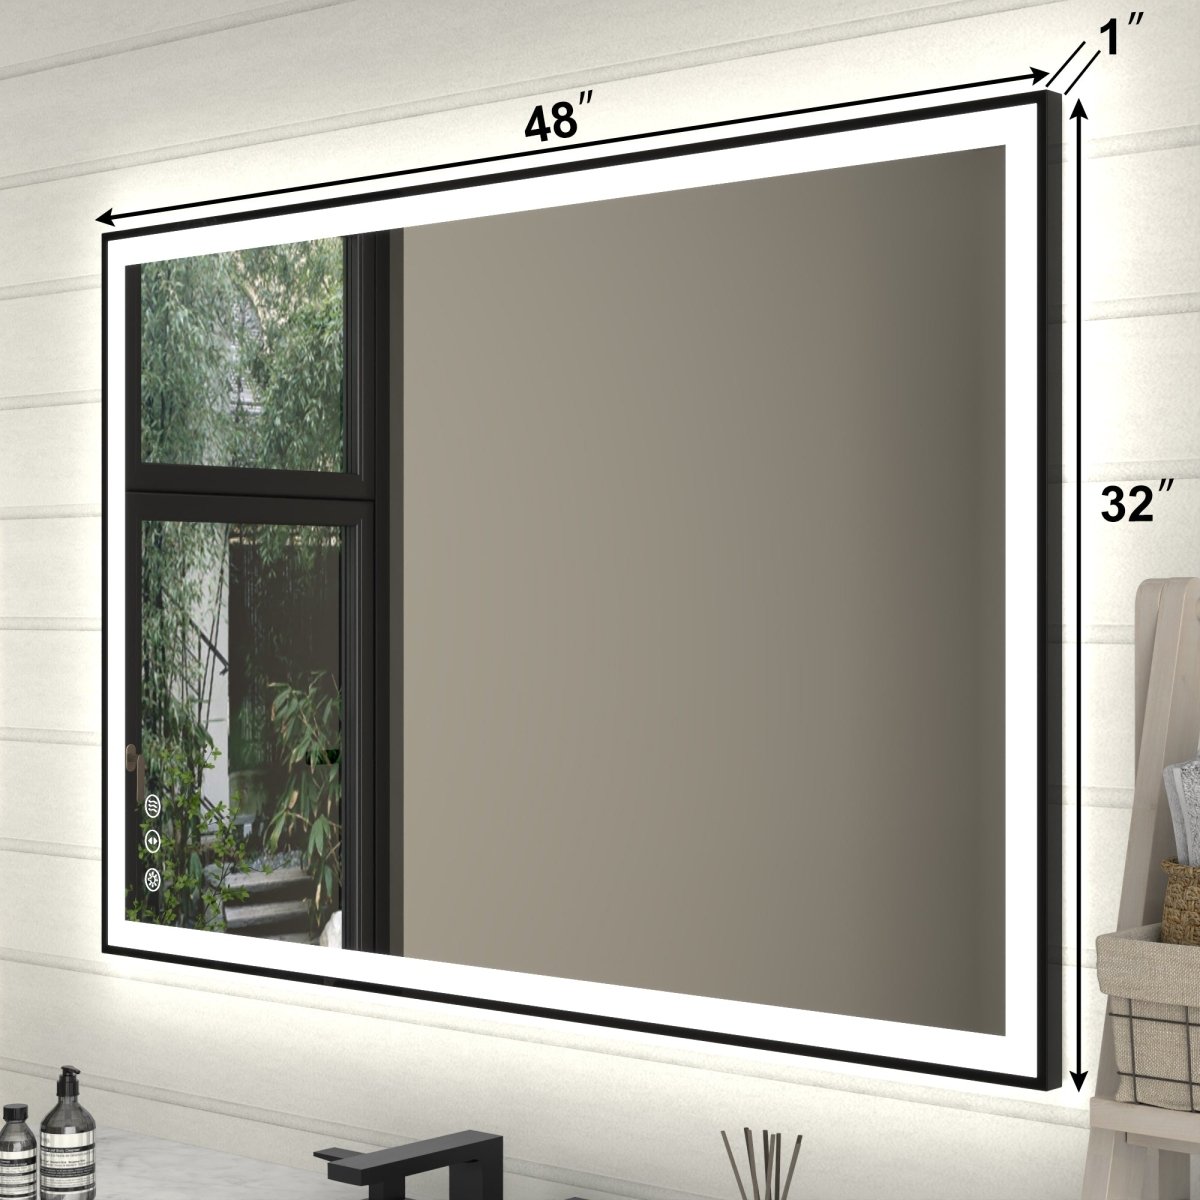 Apex - Noir 48"x32" Framed LED Lighted Bathroom Mirror